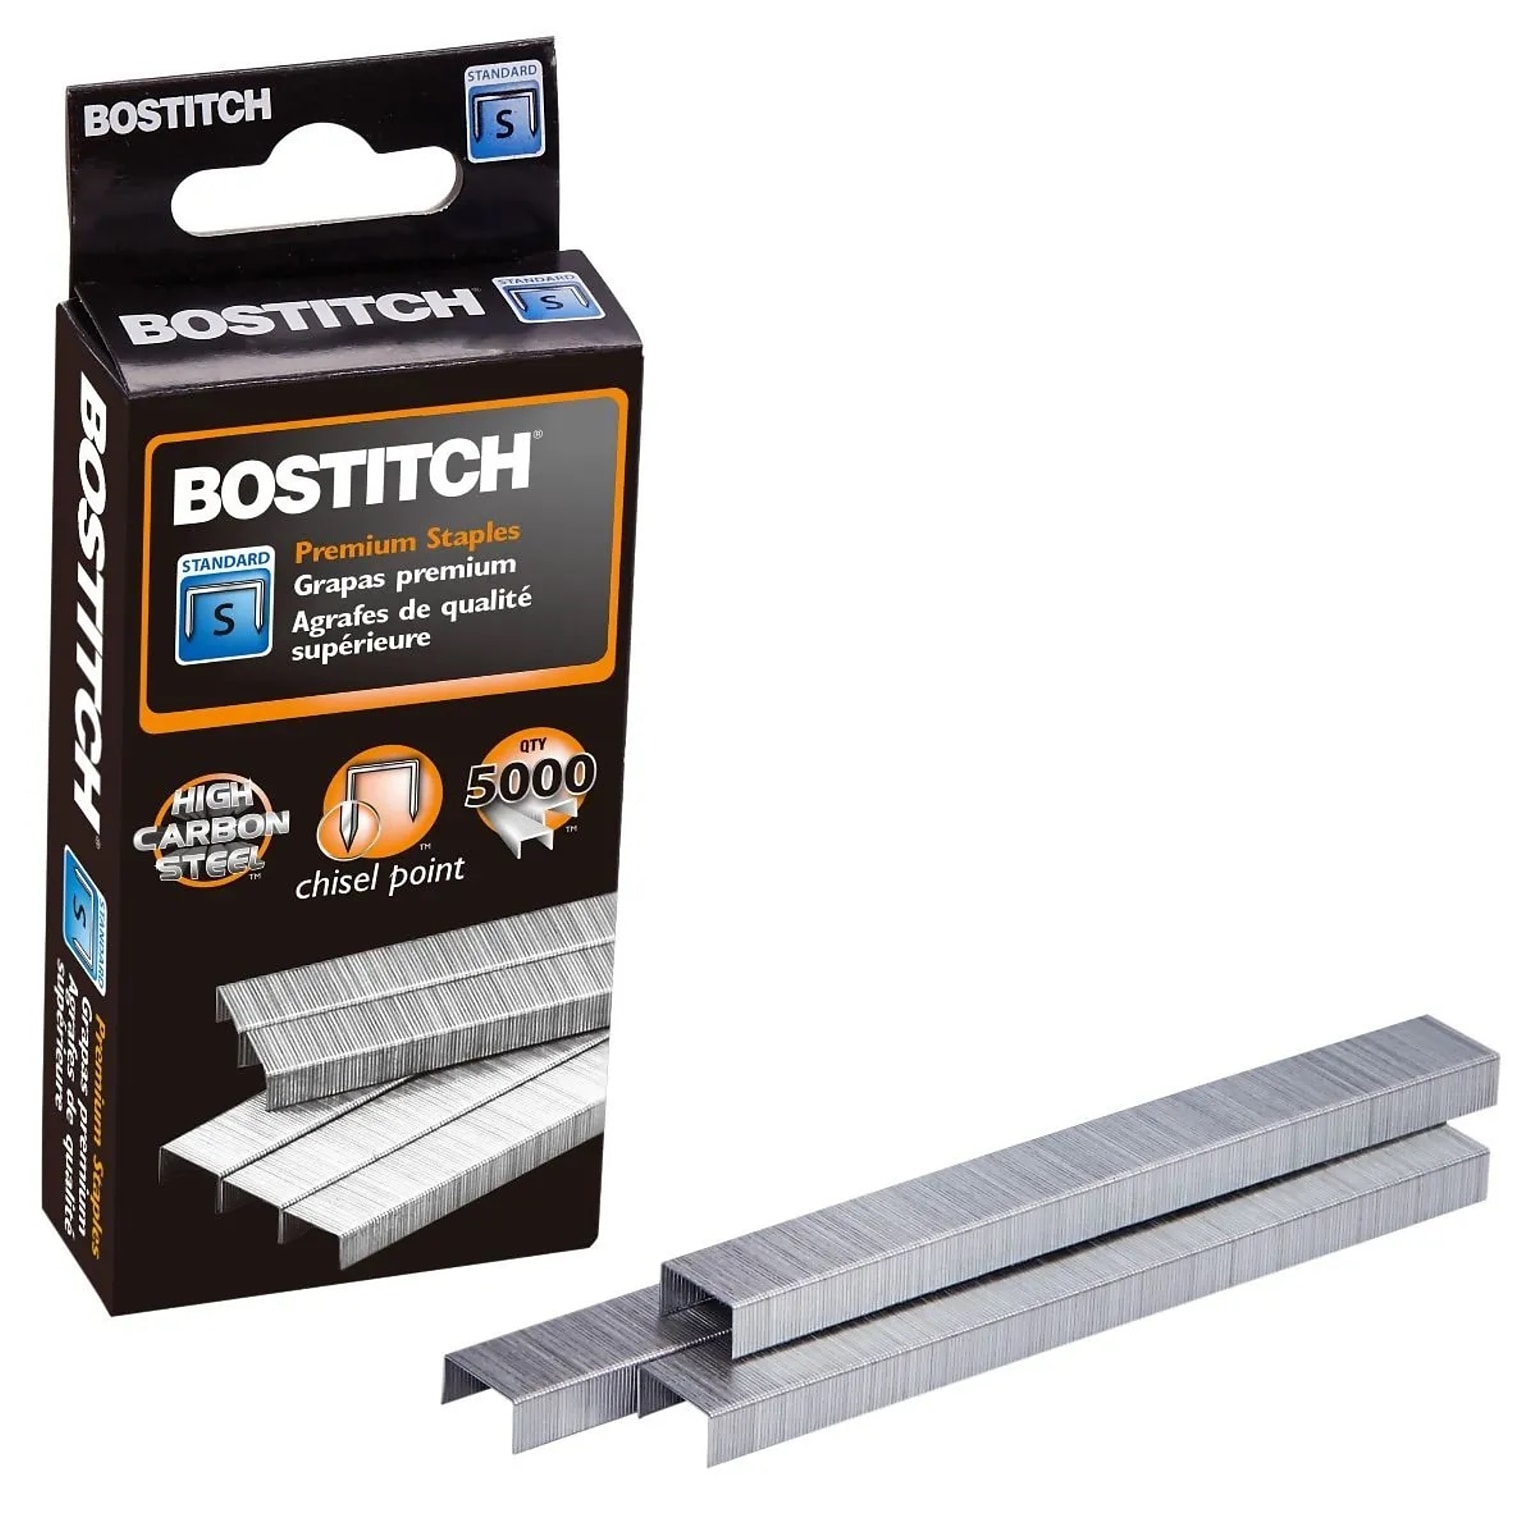 Bostitch Premium Standard Staples, 0.25 Leg Length, 5000 Staples/Box (SBS191/4CP)